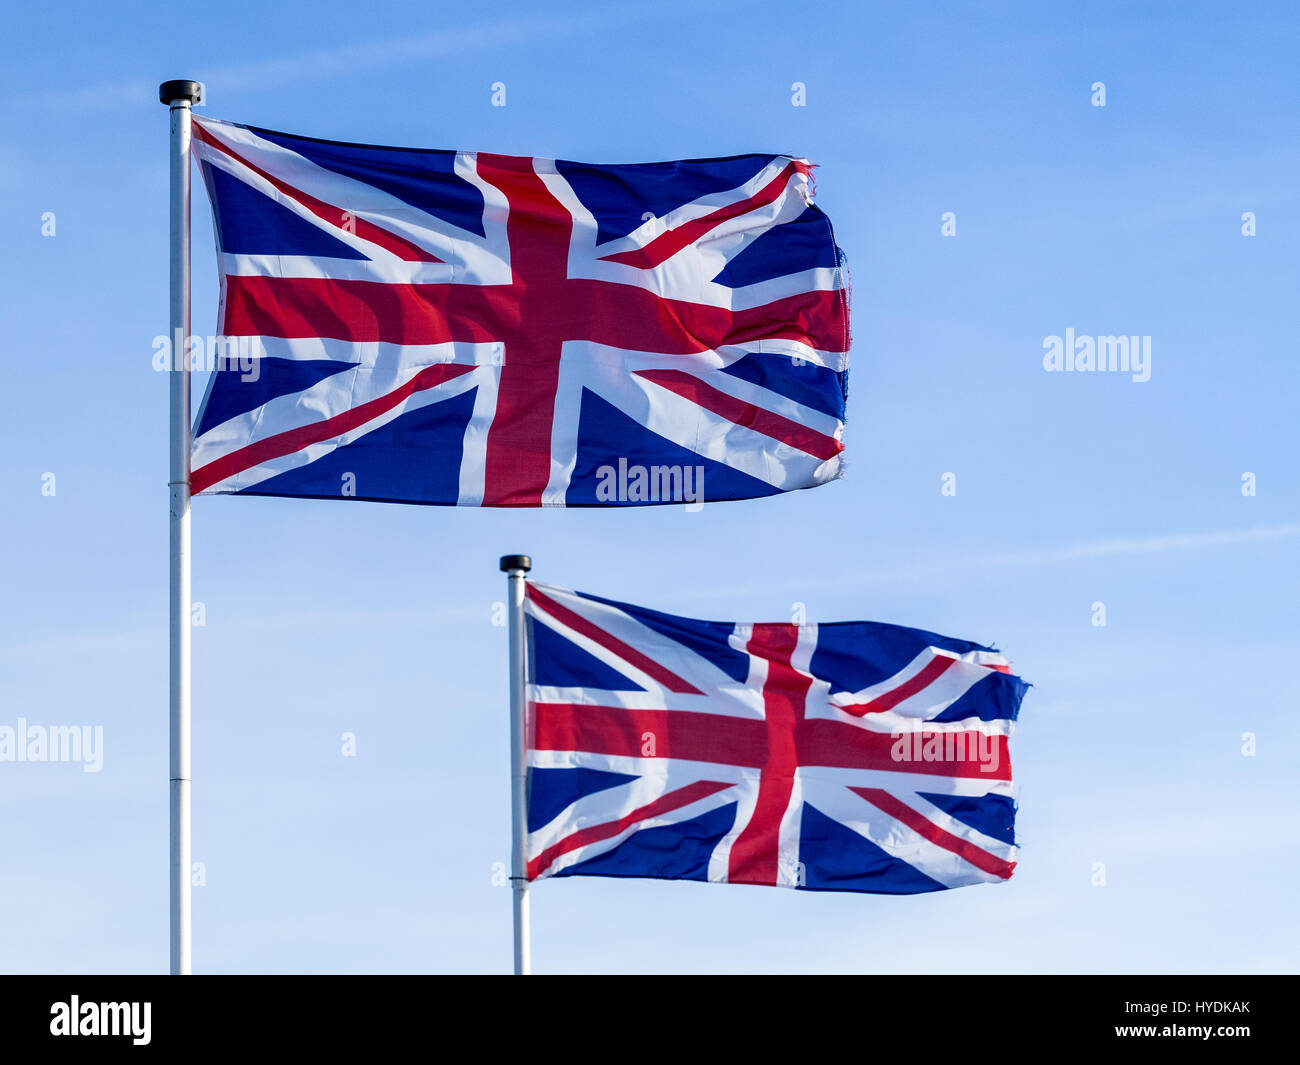 Zwei Union Jack Fahnen flattern im wind Stockfoto